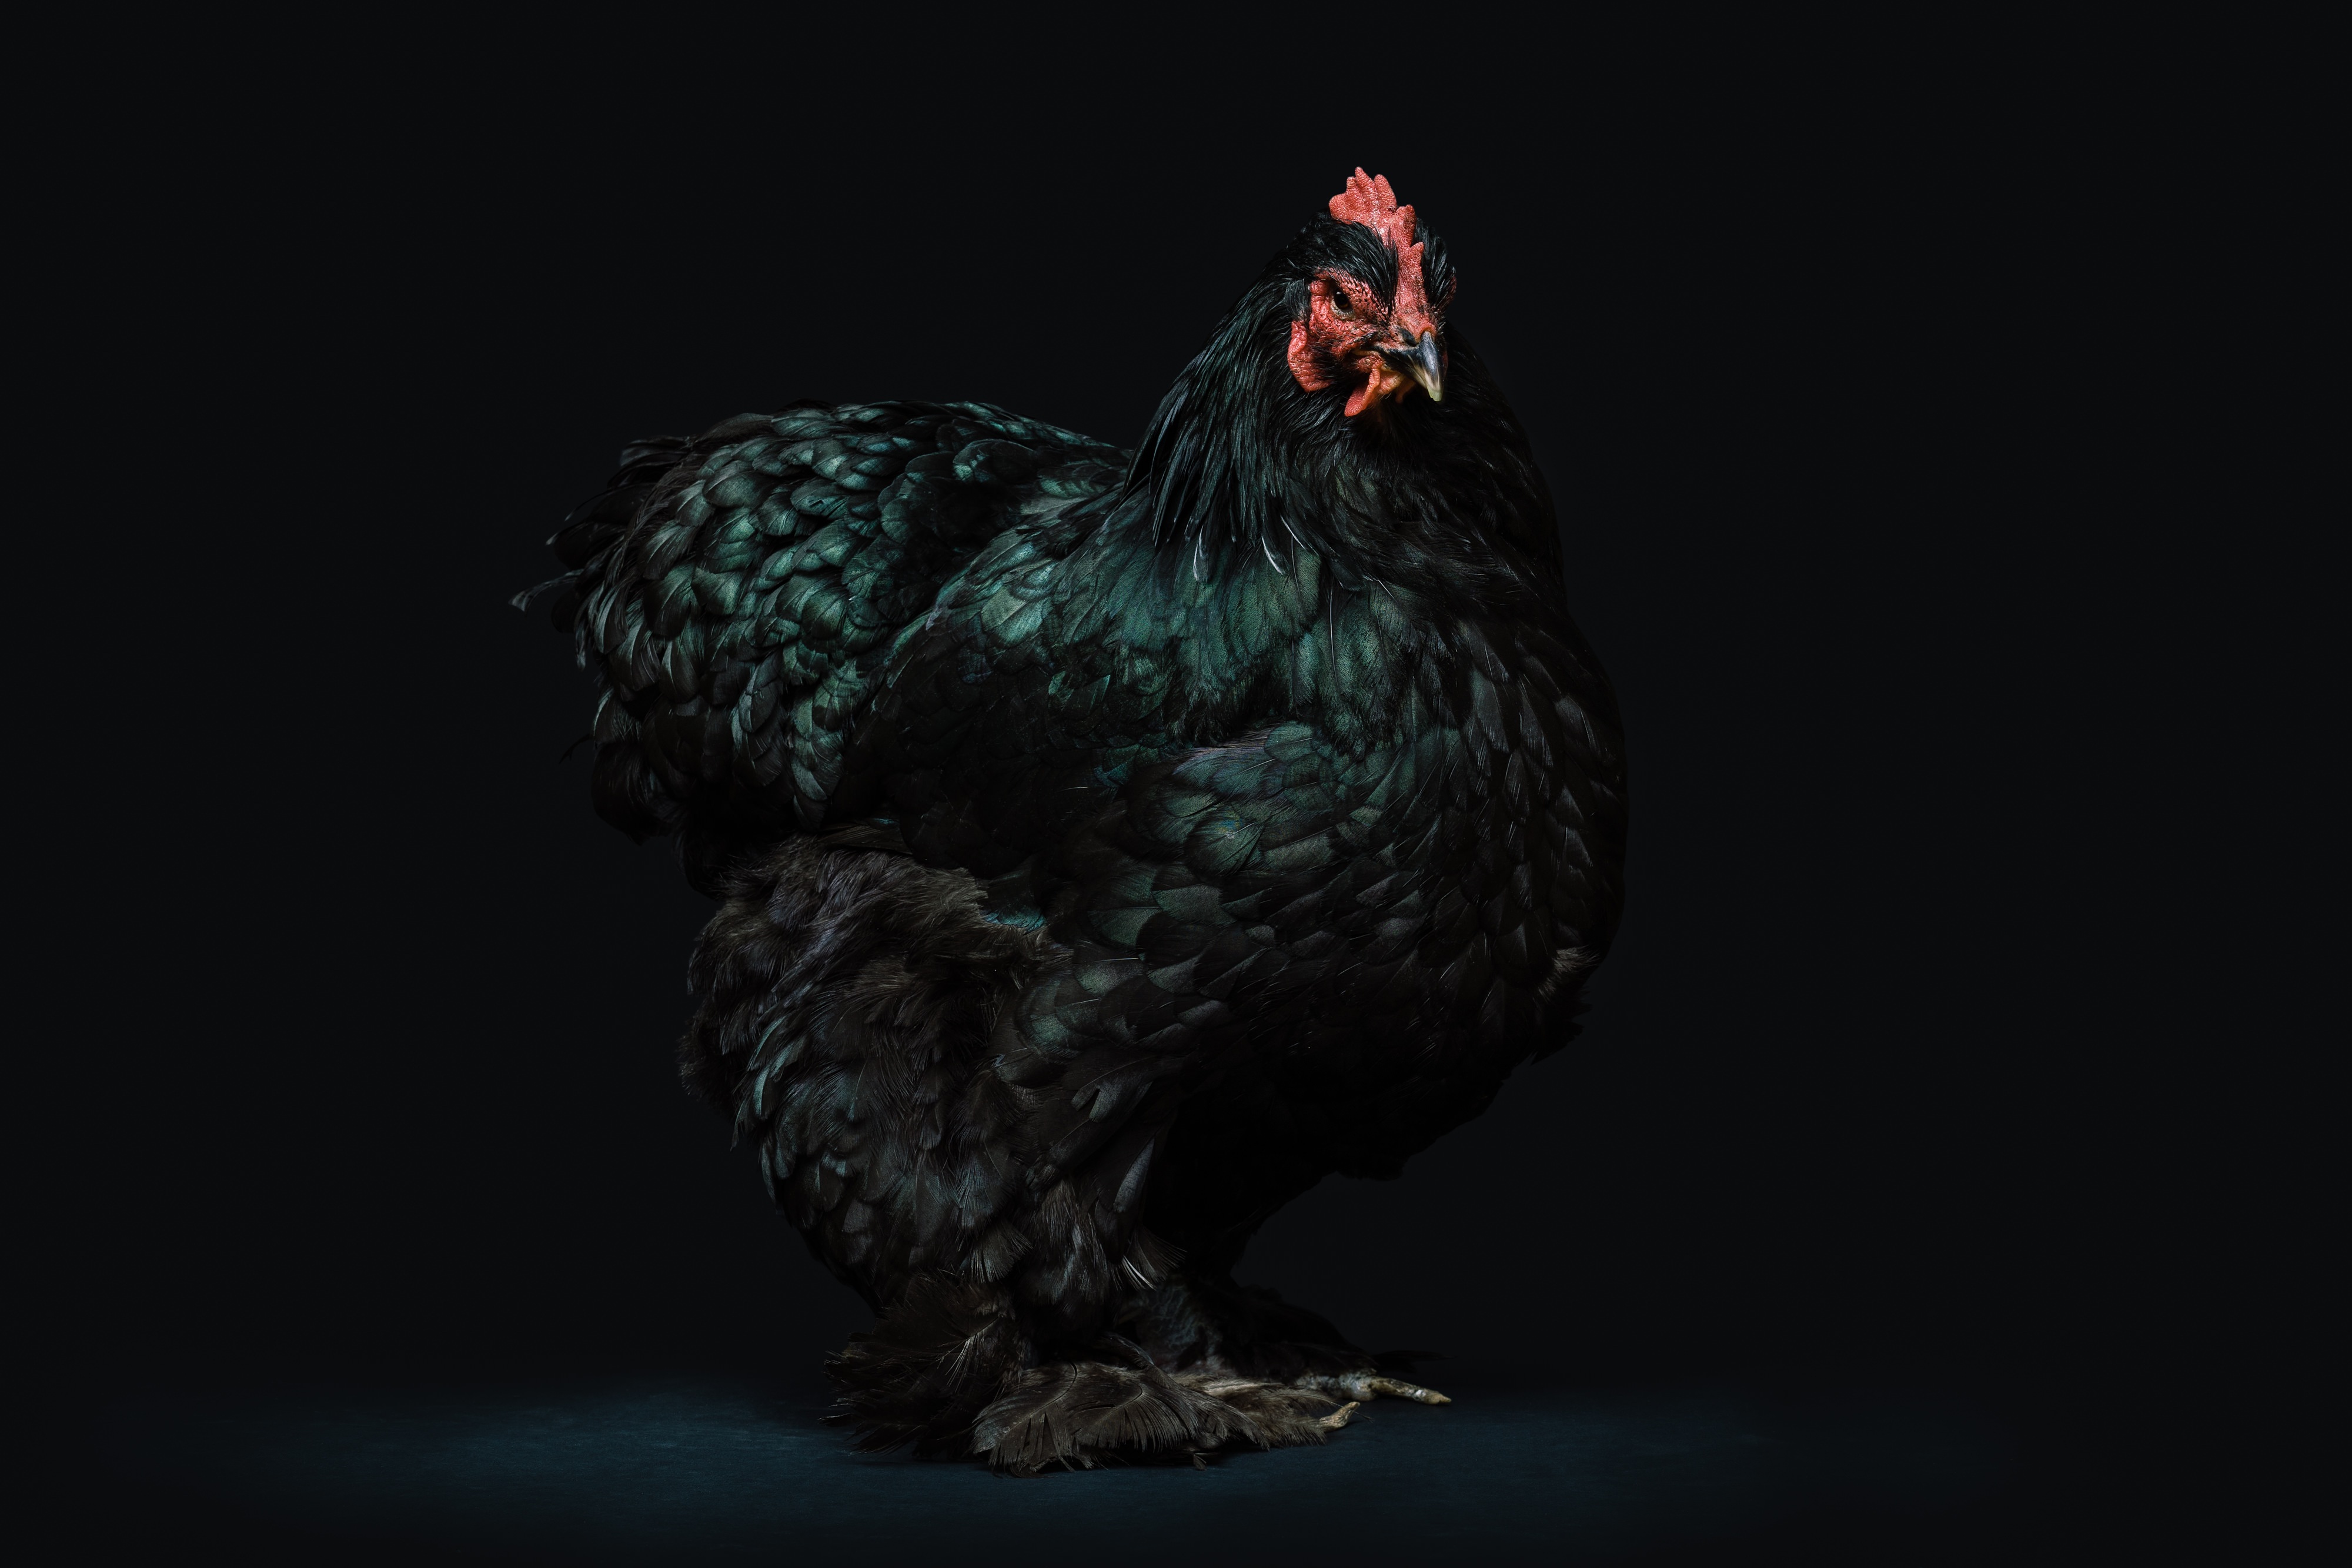 397956 descargar imagen animales, gallo, ave, pollo, aves: fondos de pantalla y protectores de pantalla gratis